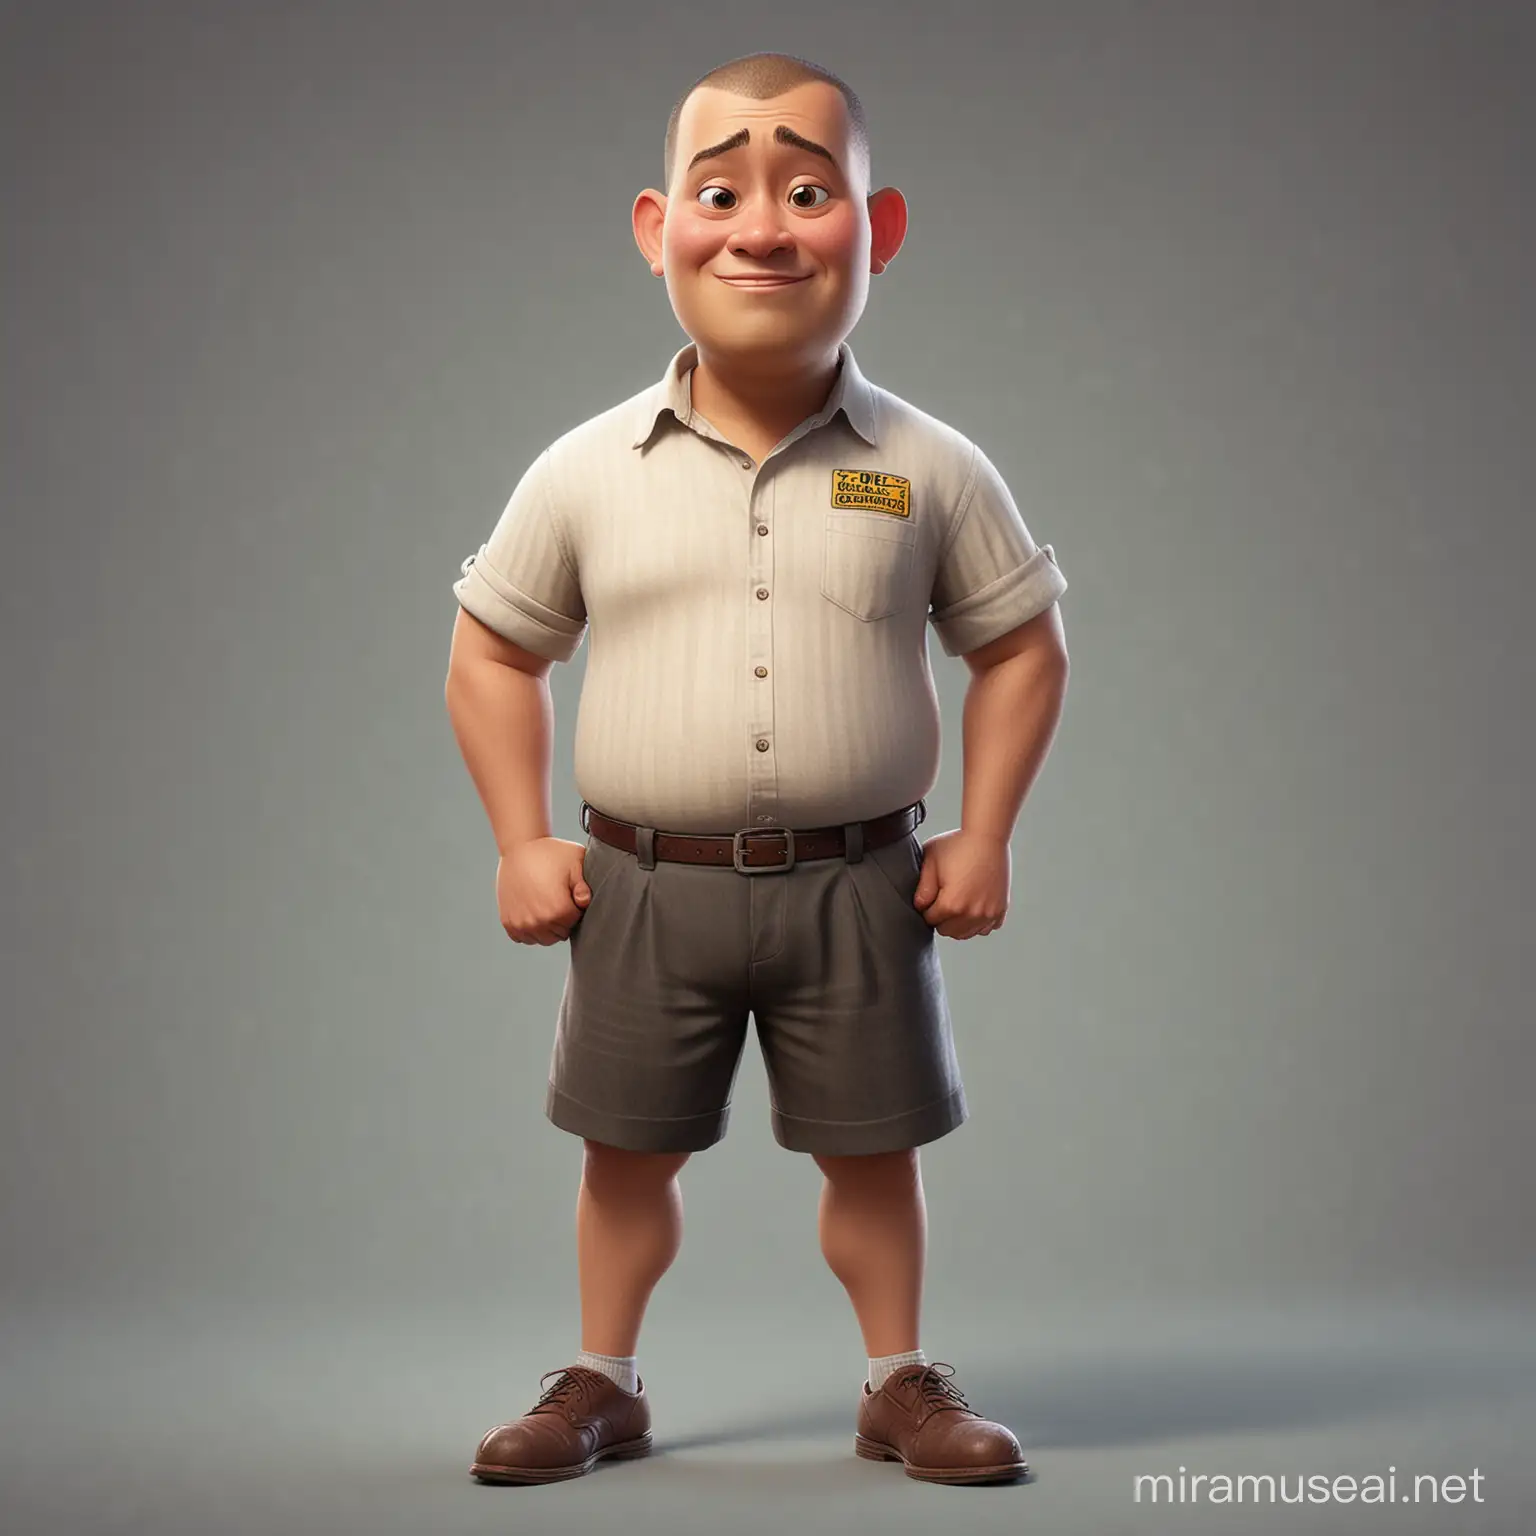 An indonesian guy standing up, buzz cut, semi fat, Semi caricature, disney style, full body